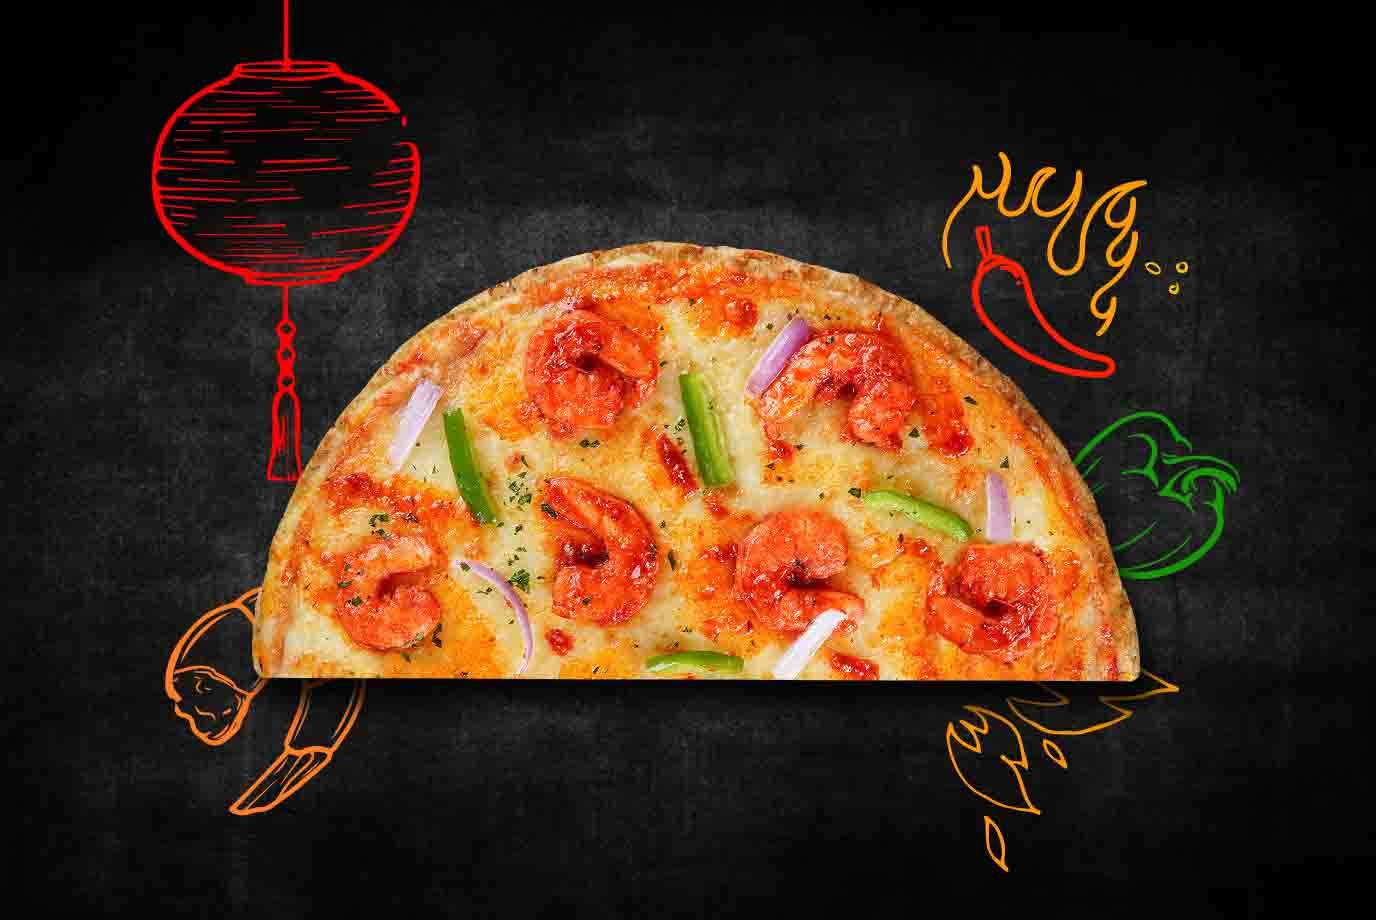 Dragonfire Prawns Semizza (Half Pizza)(Serves 1)